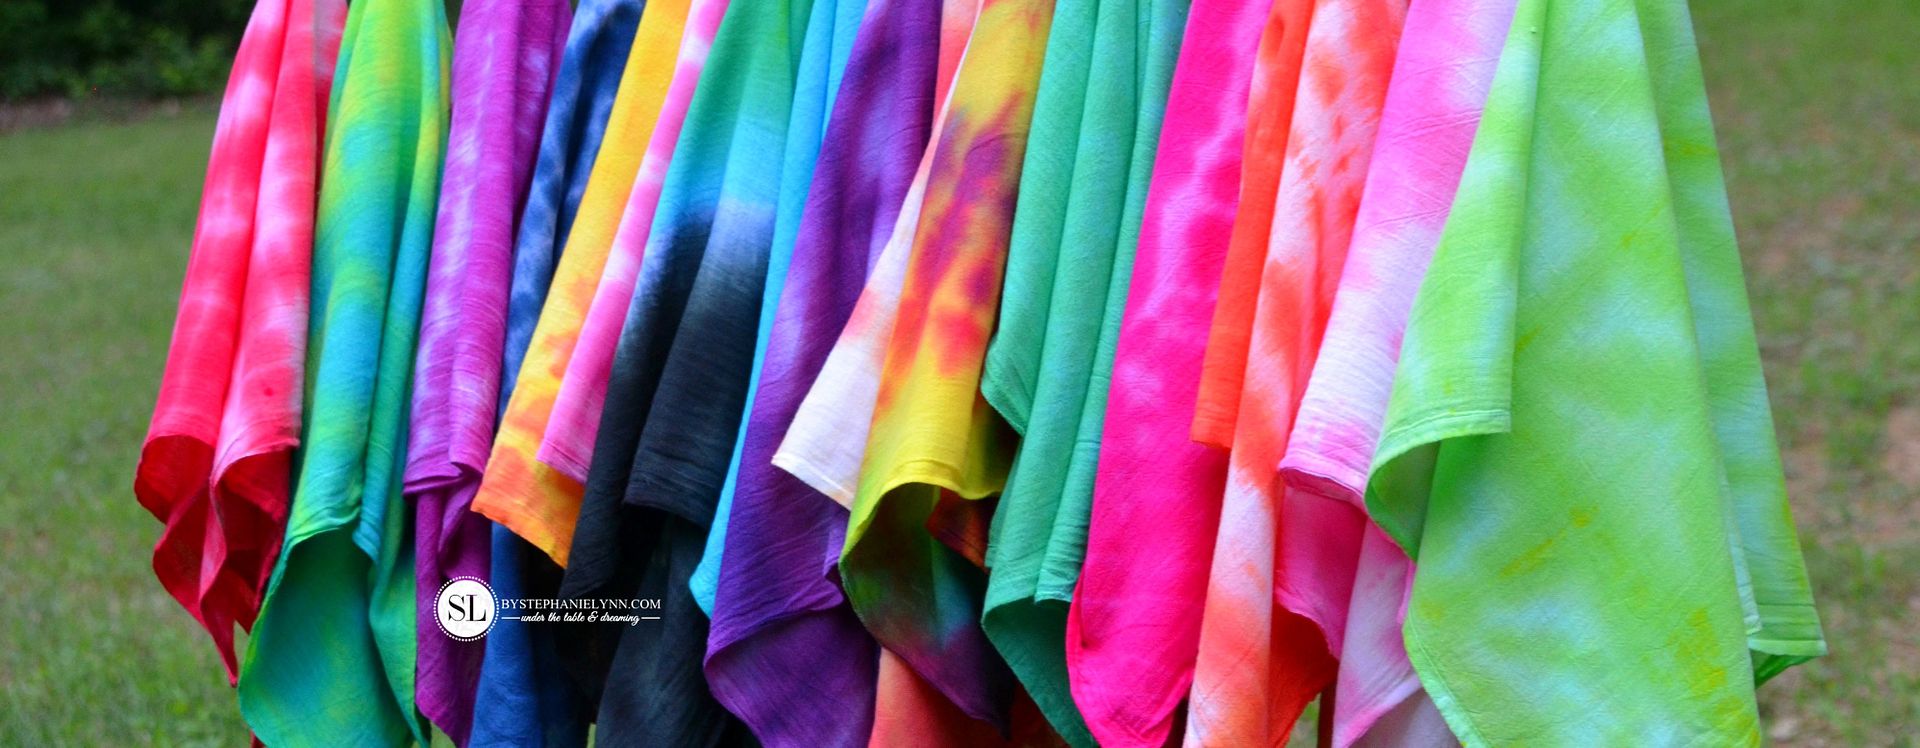 Tie Dye Folding Techniques | 16 Vibrant Tie-dye Patterns #michaelsmakers #tiedyeyoursummer 